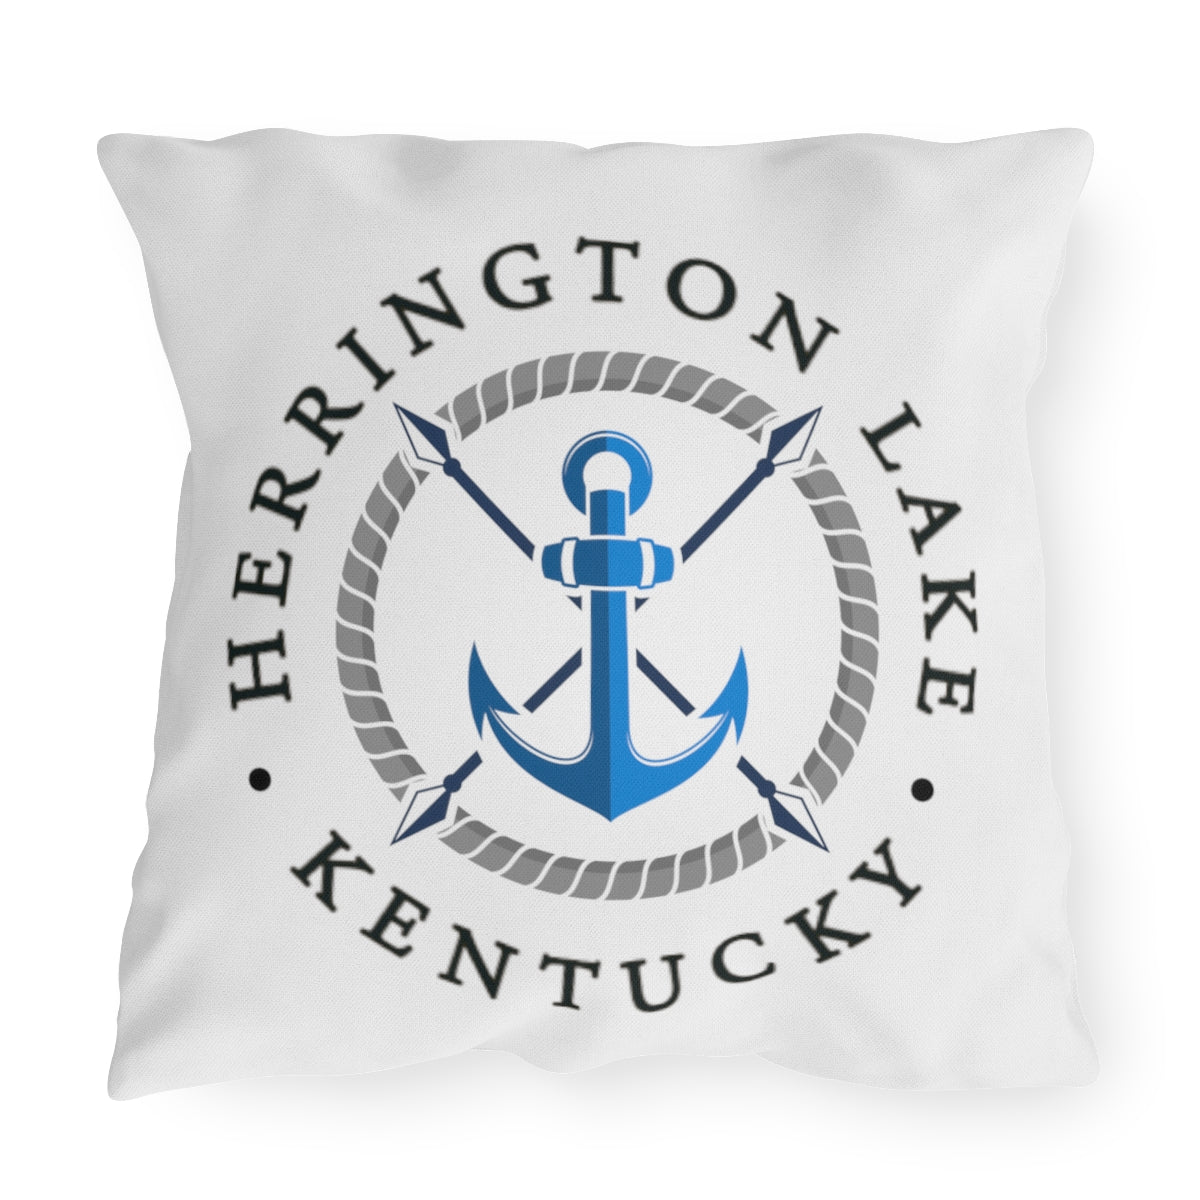 Herrington Lake Anchor Outdoor Pillows in White